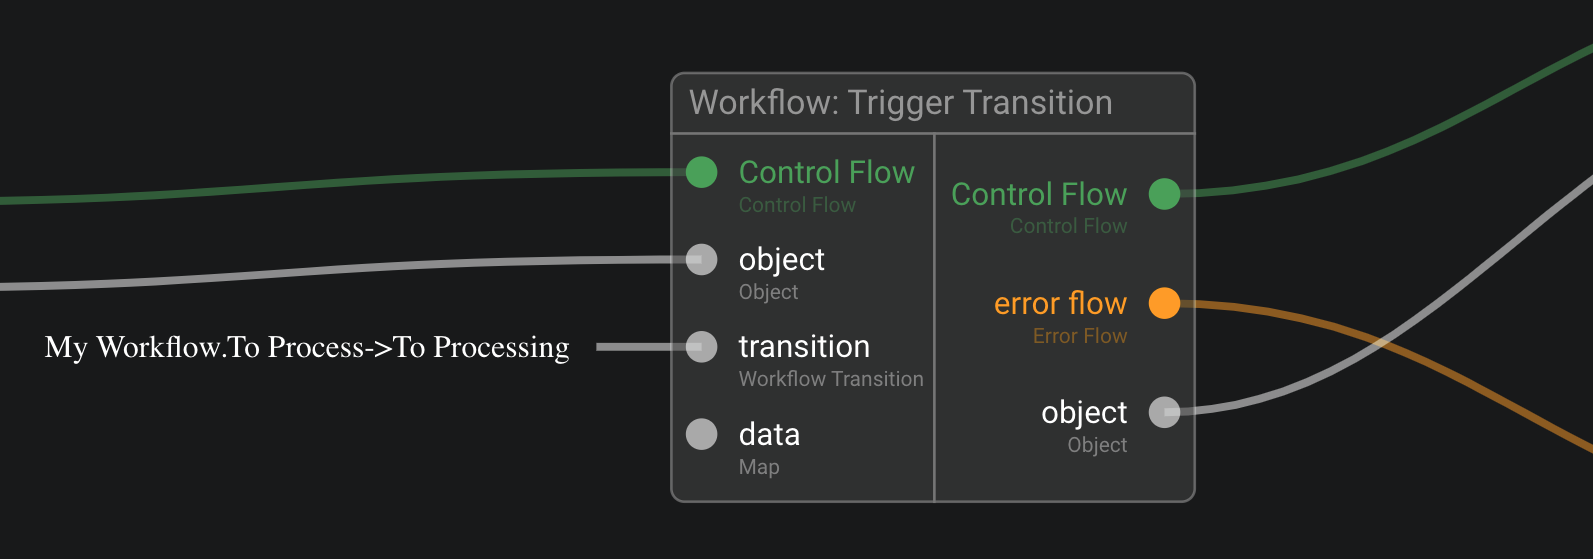 workflow_trigger_transition